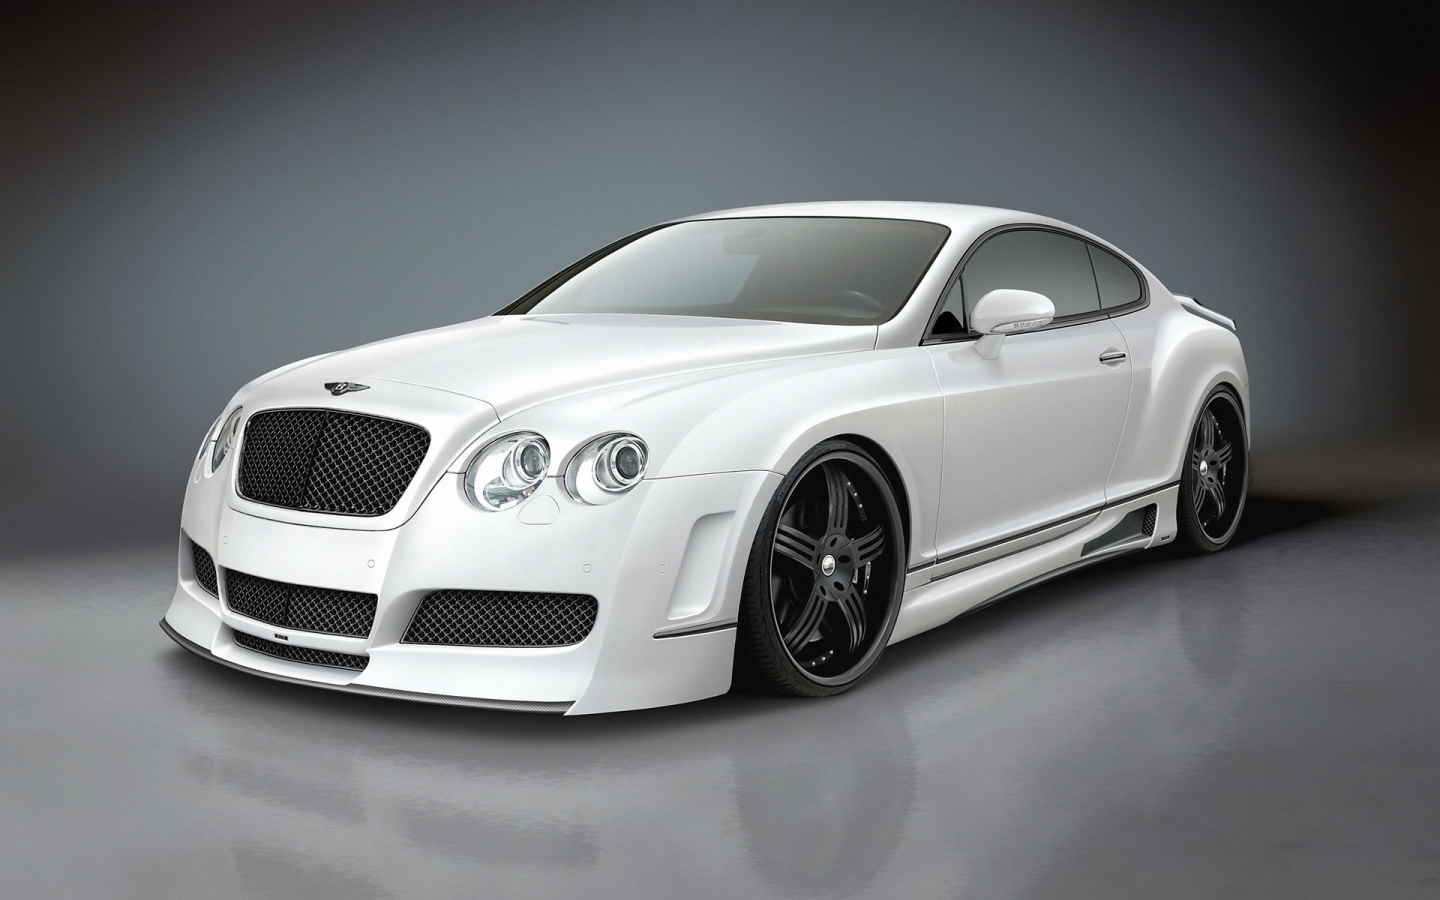 2009 Premier Bentley Continental GT for 1440 x 900 widescreen resolution